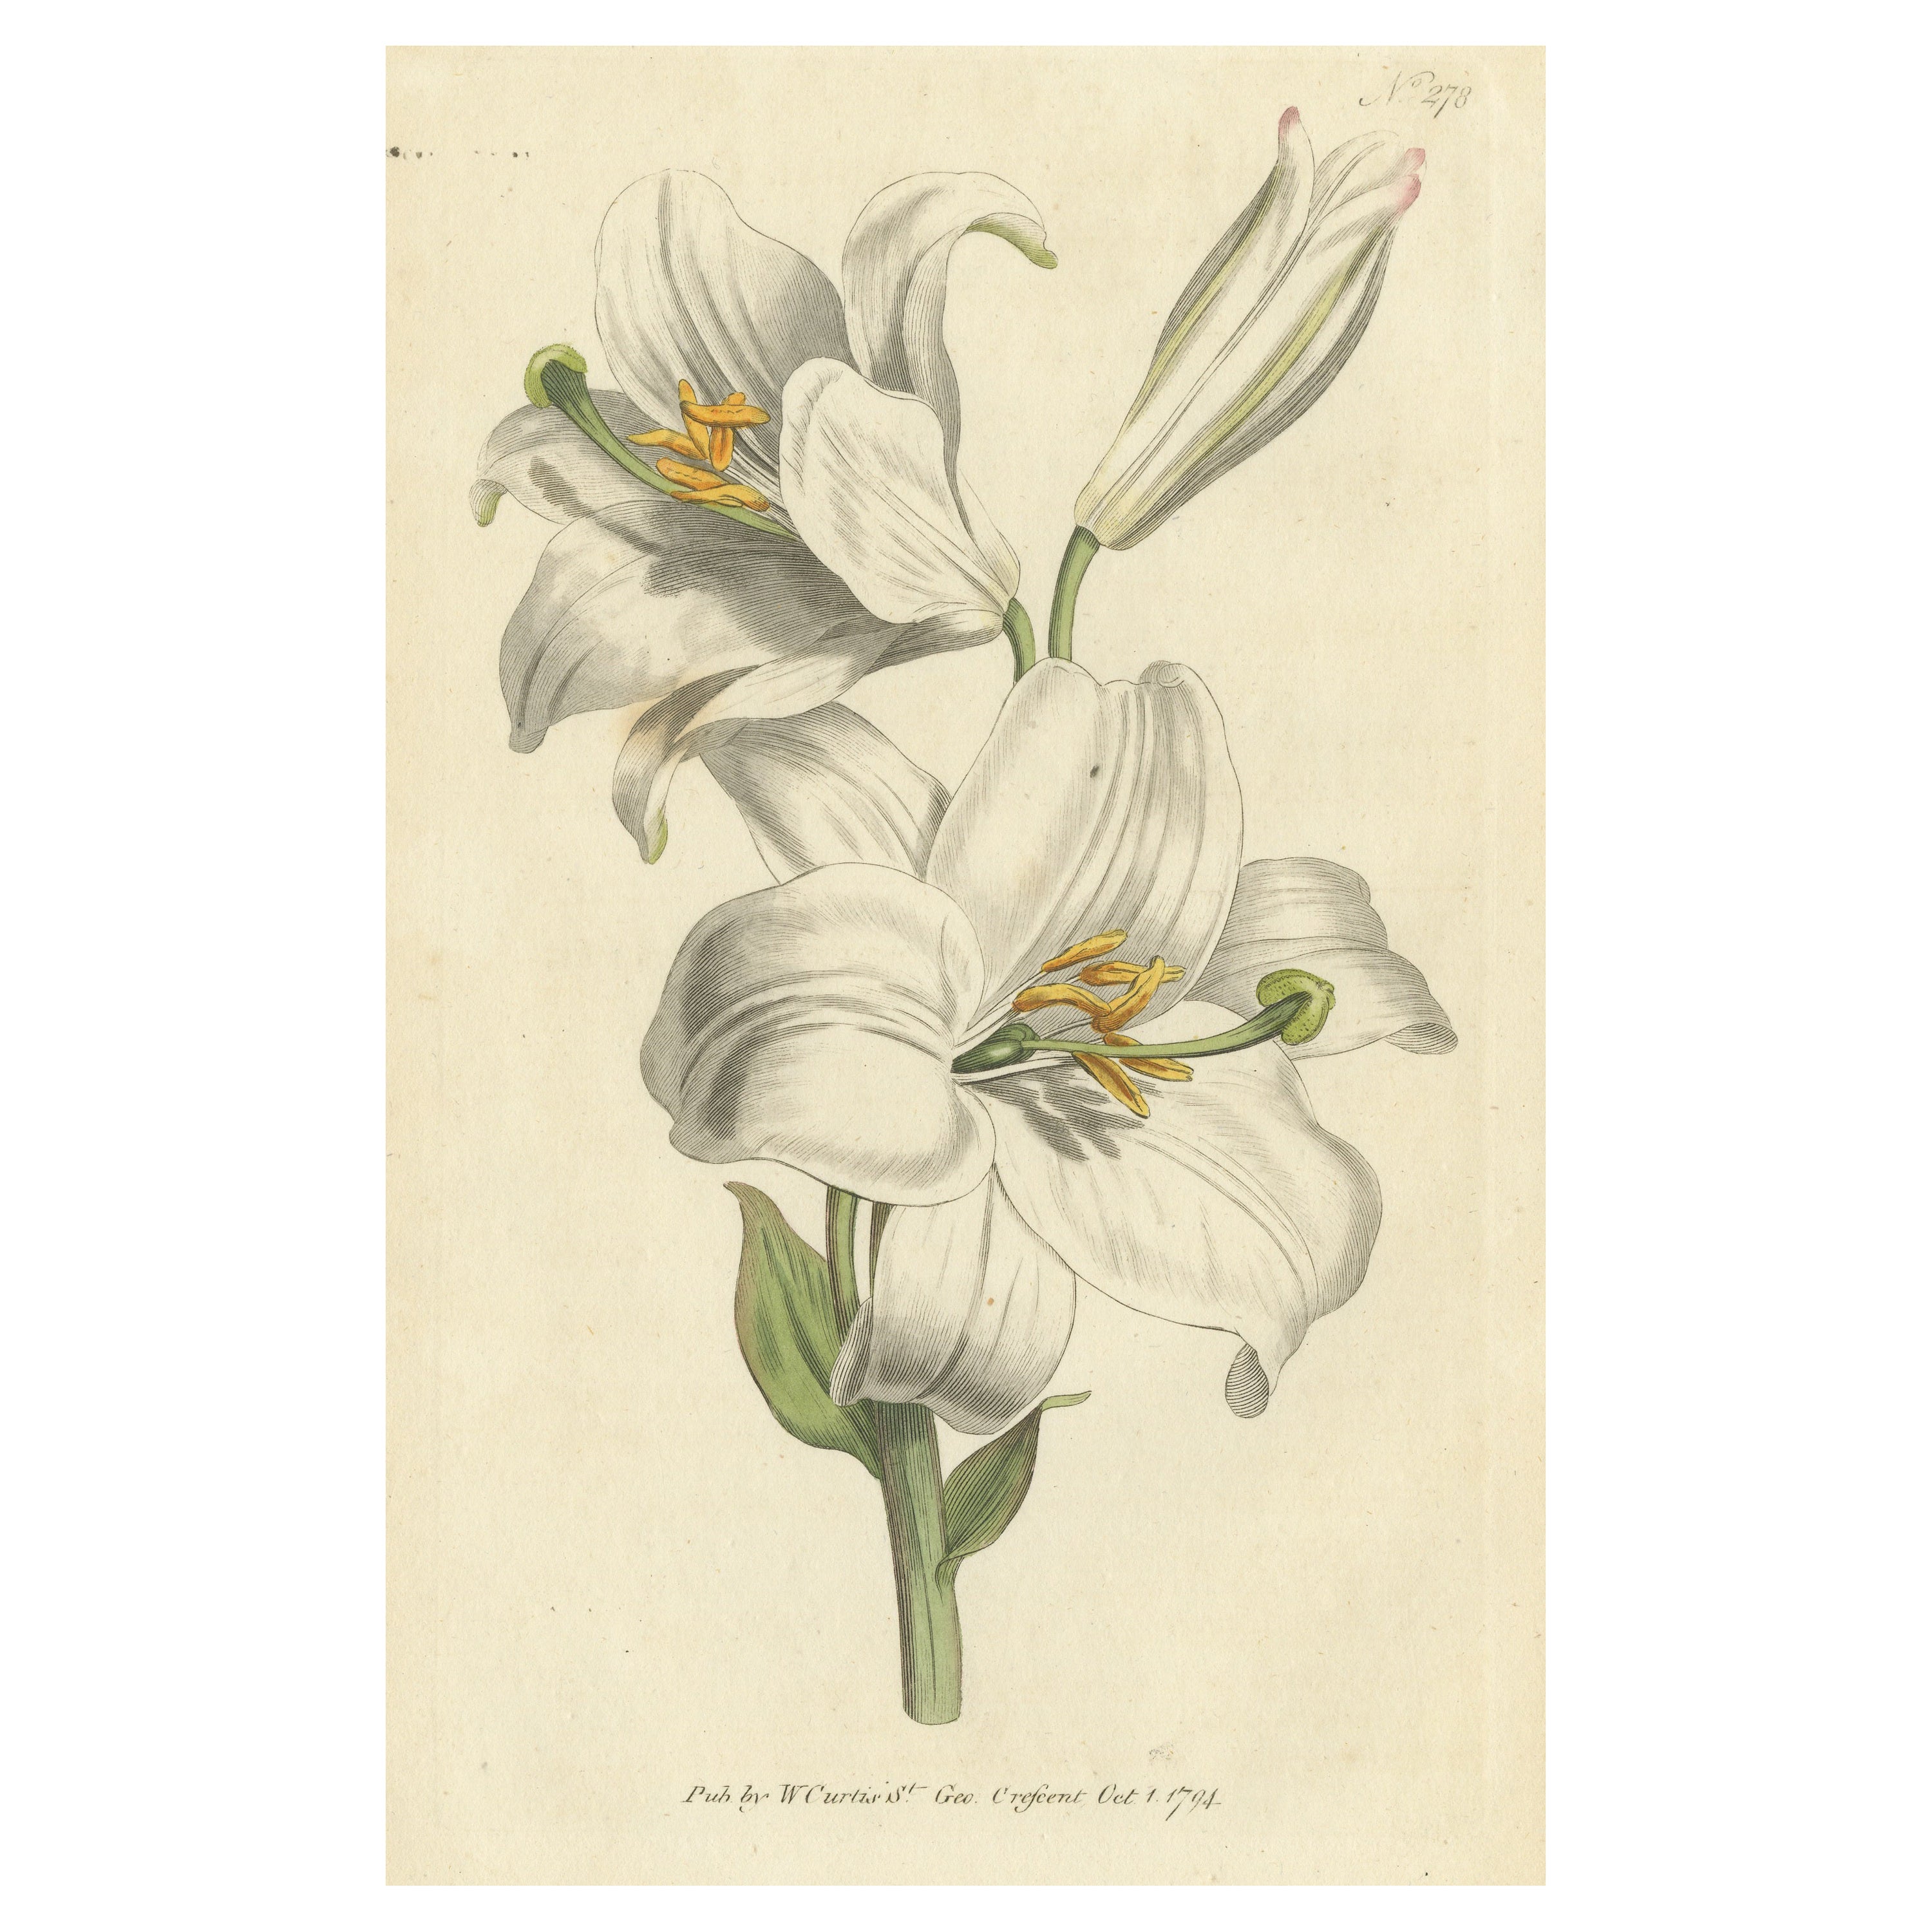 Antique Botany Print of Litium Candidum or White Lily